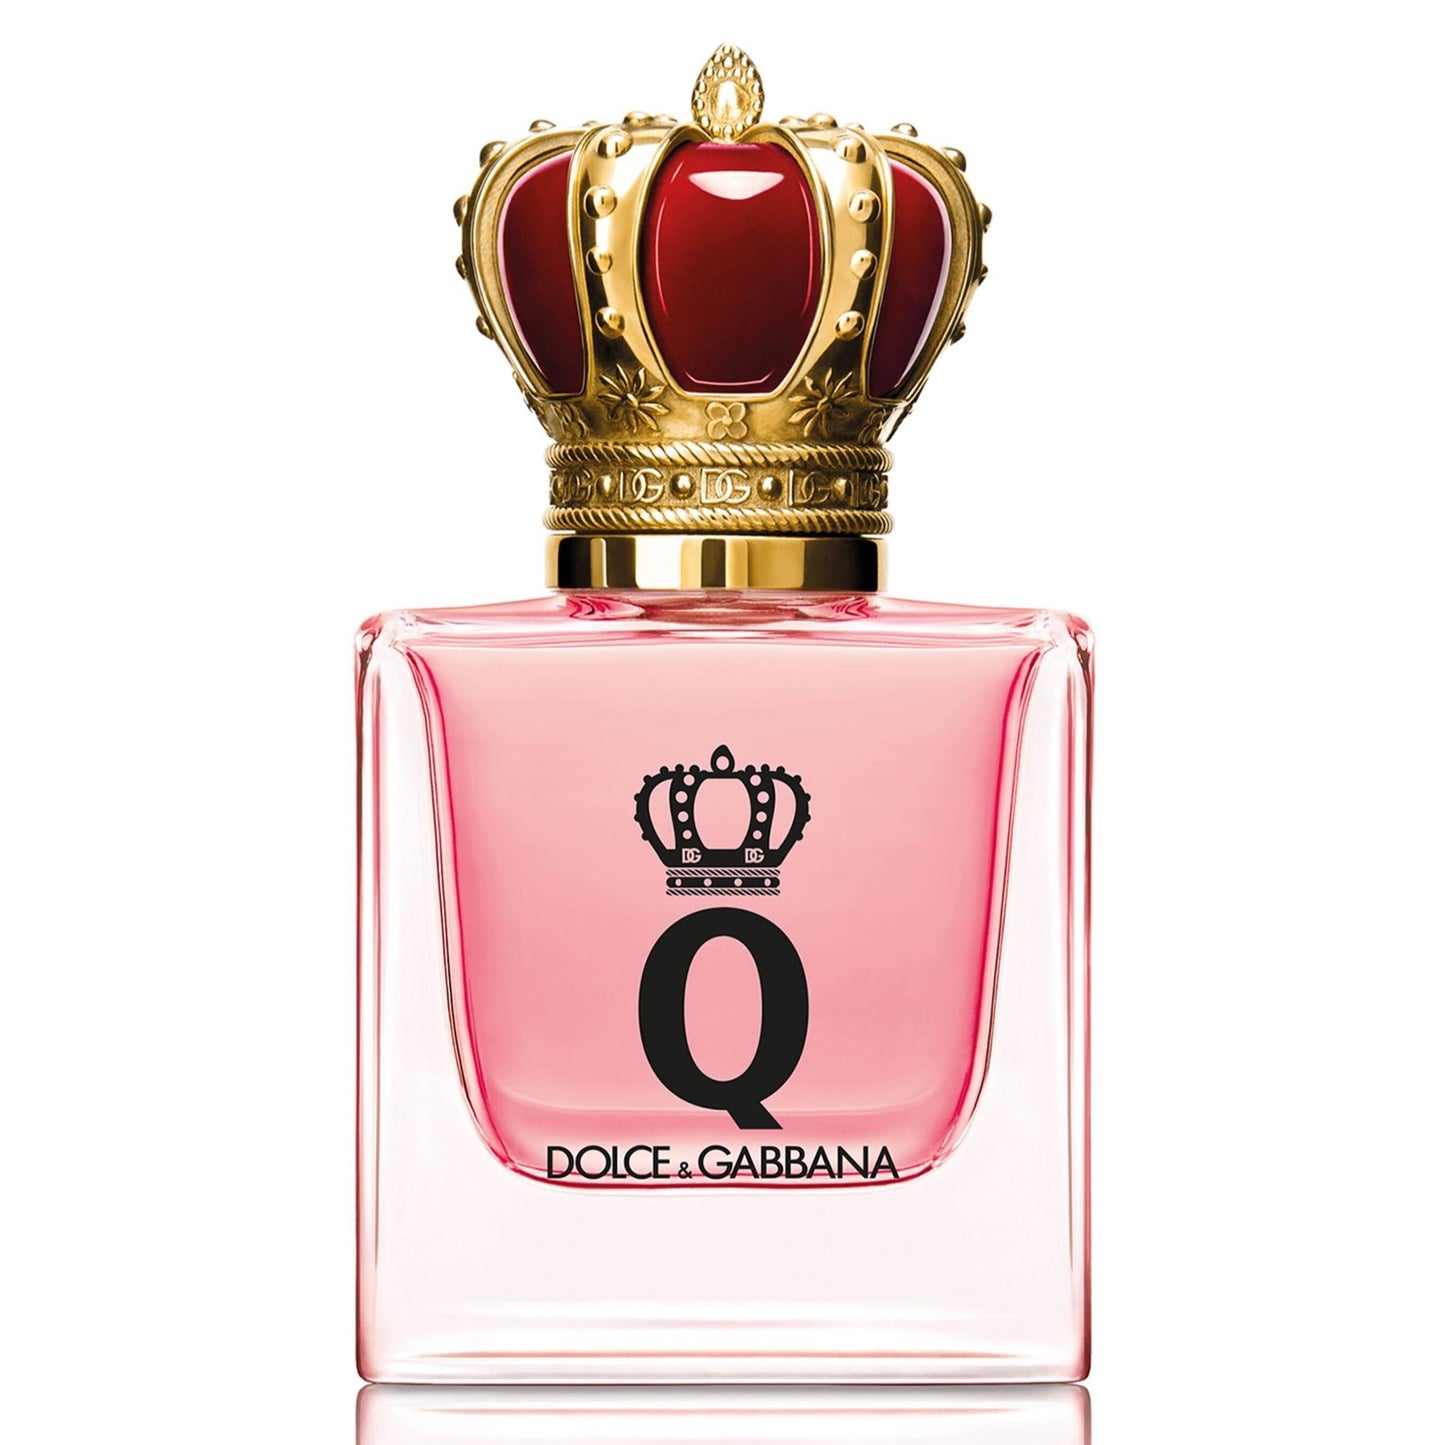 Dolce&Gabbana - Q (Queen) EDP 50ml